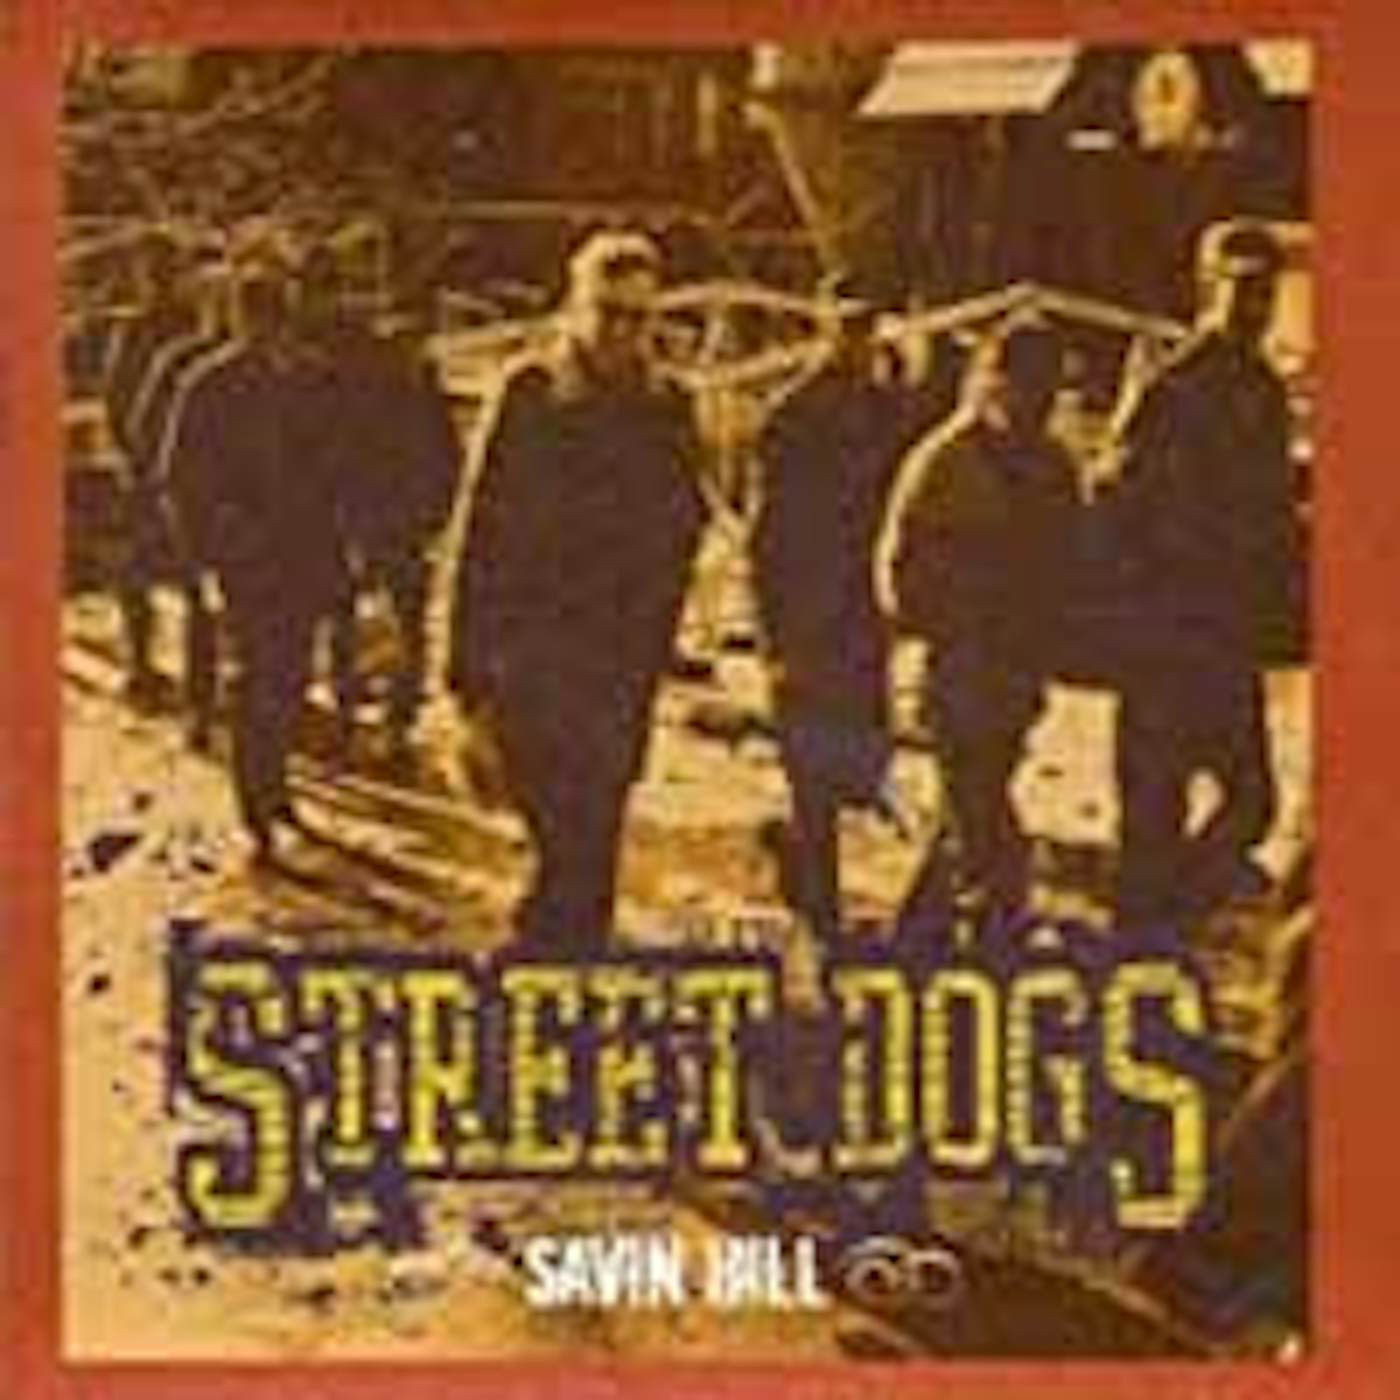 Street Dogs LP - Savin Hill (Vinyl)